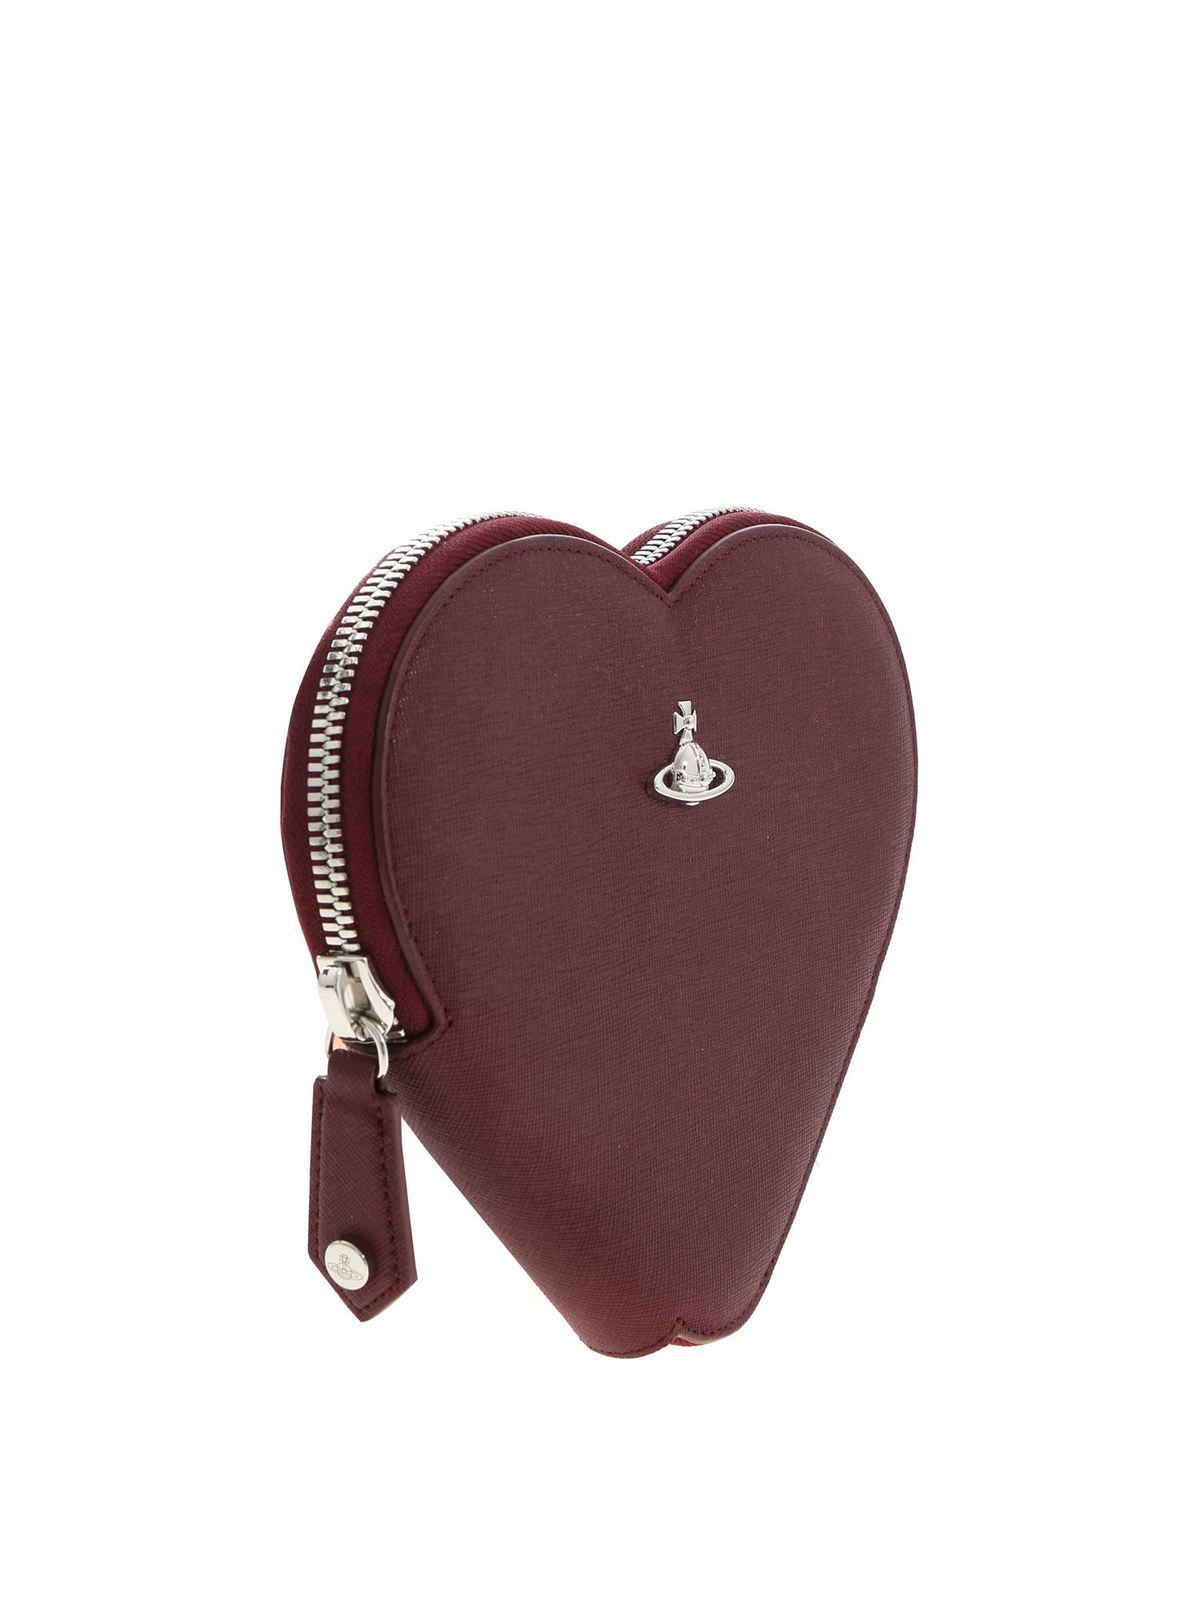 Vivienne Westwood Women's Victoria New Heart Cross Body Bag